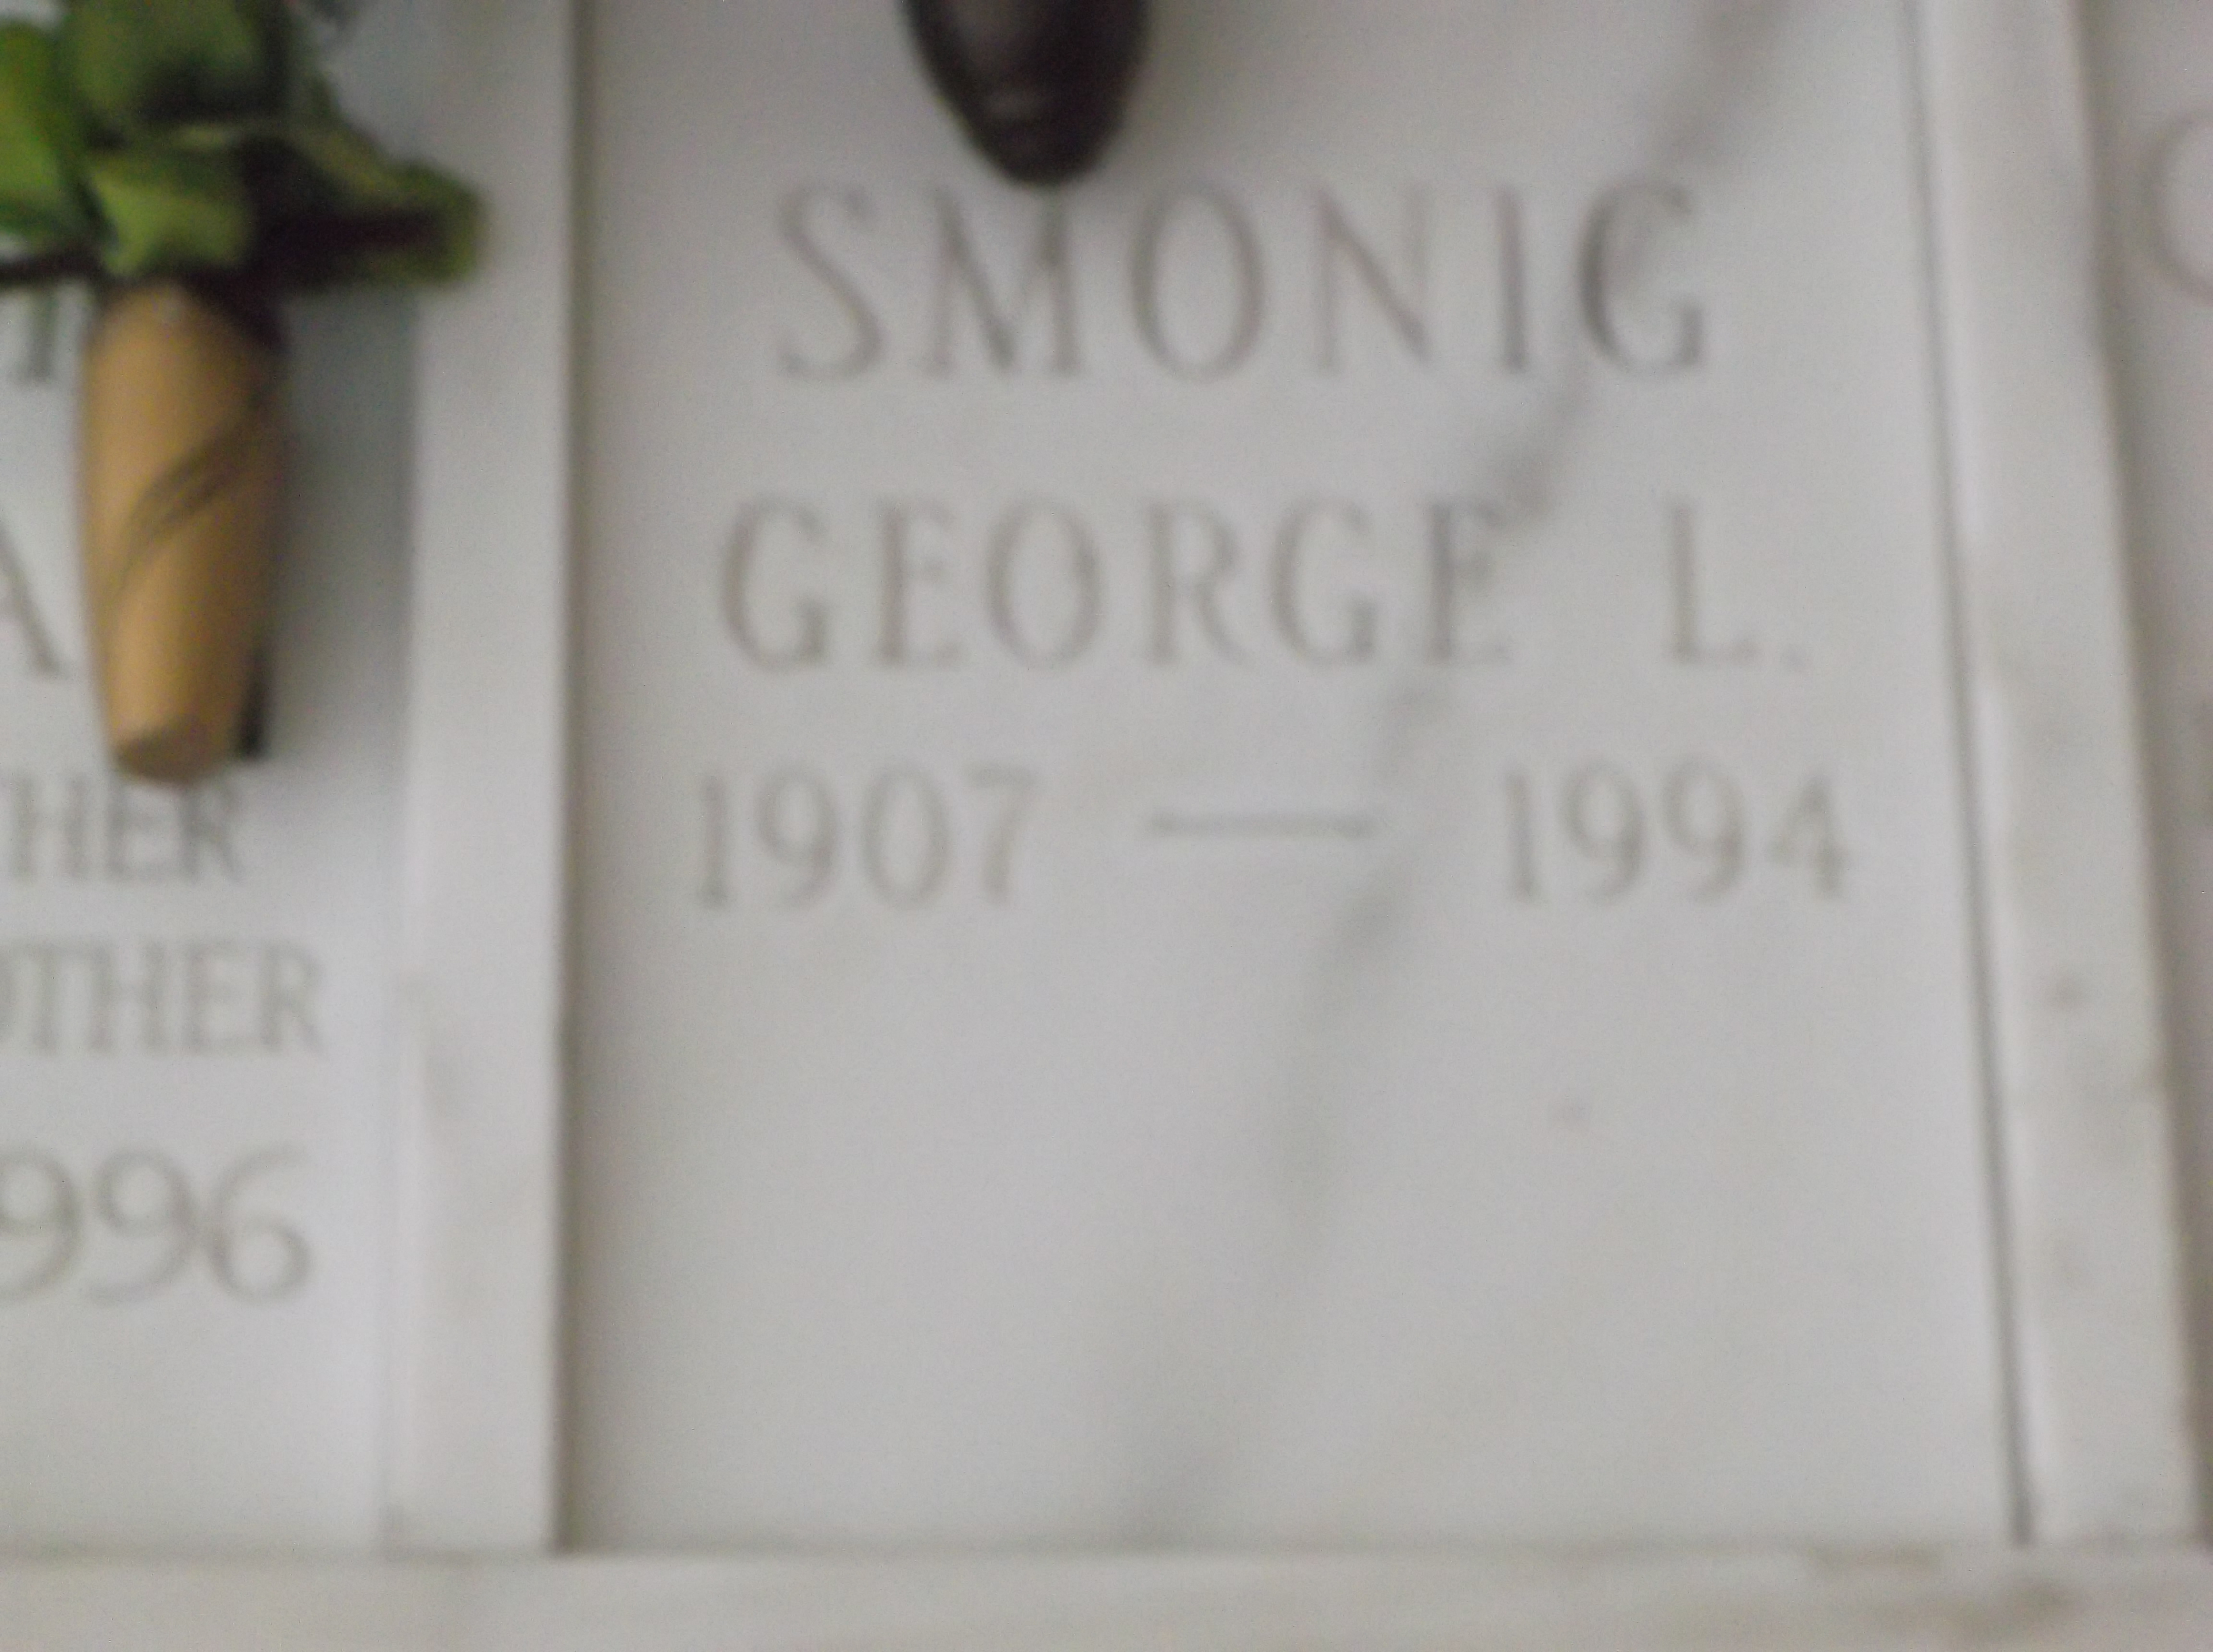 George L Smonig